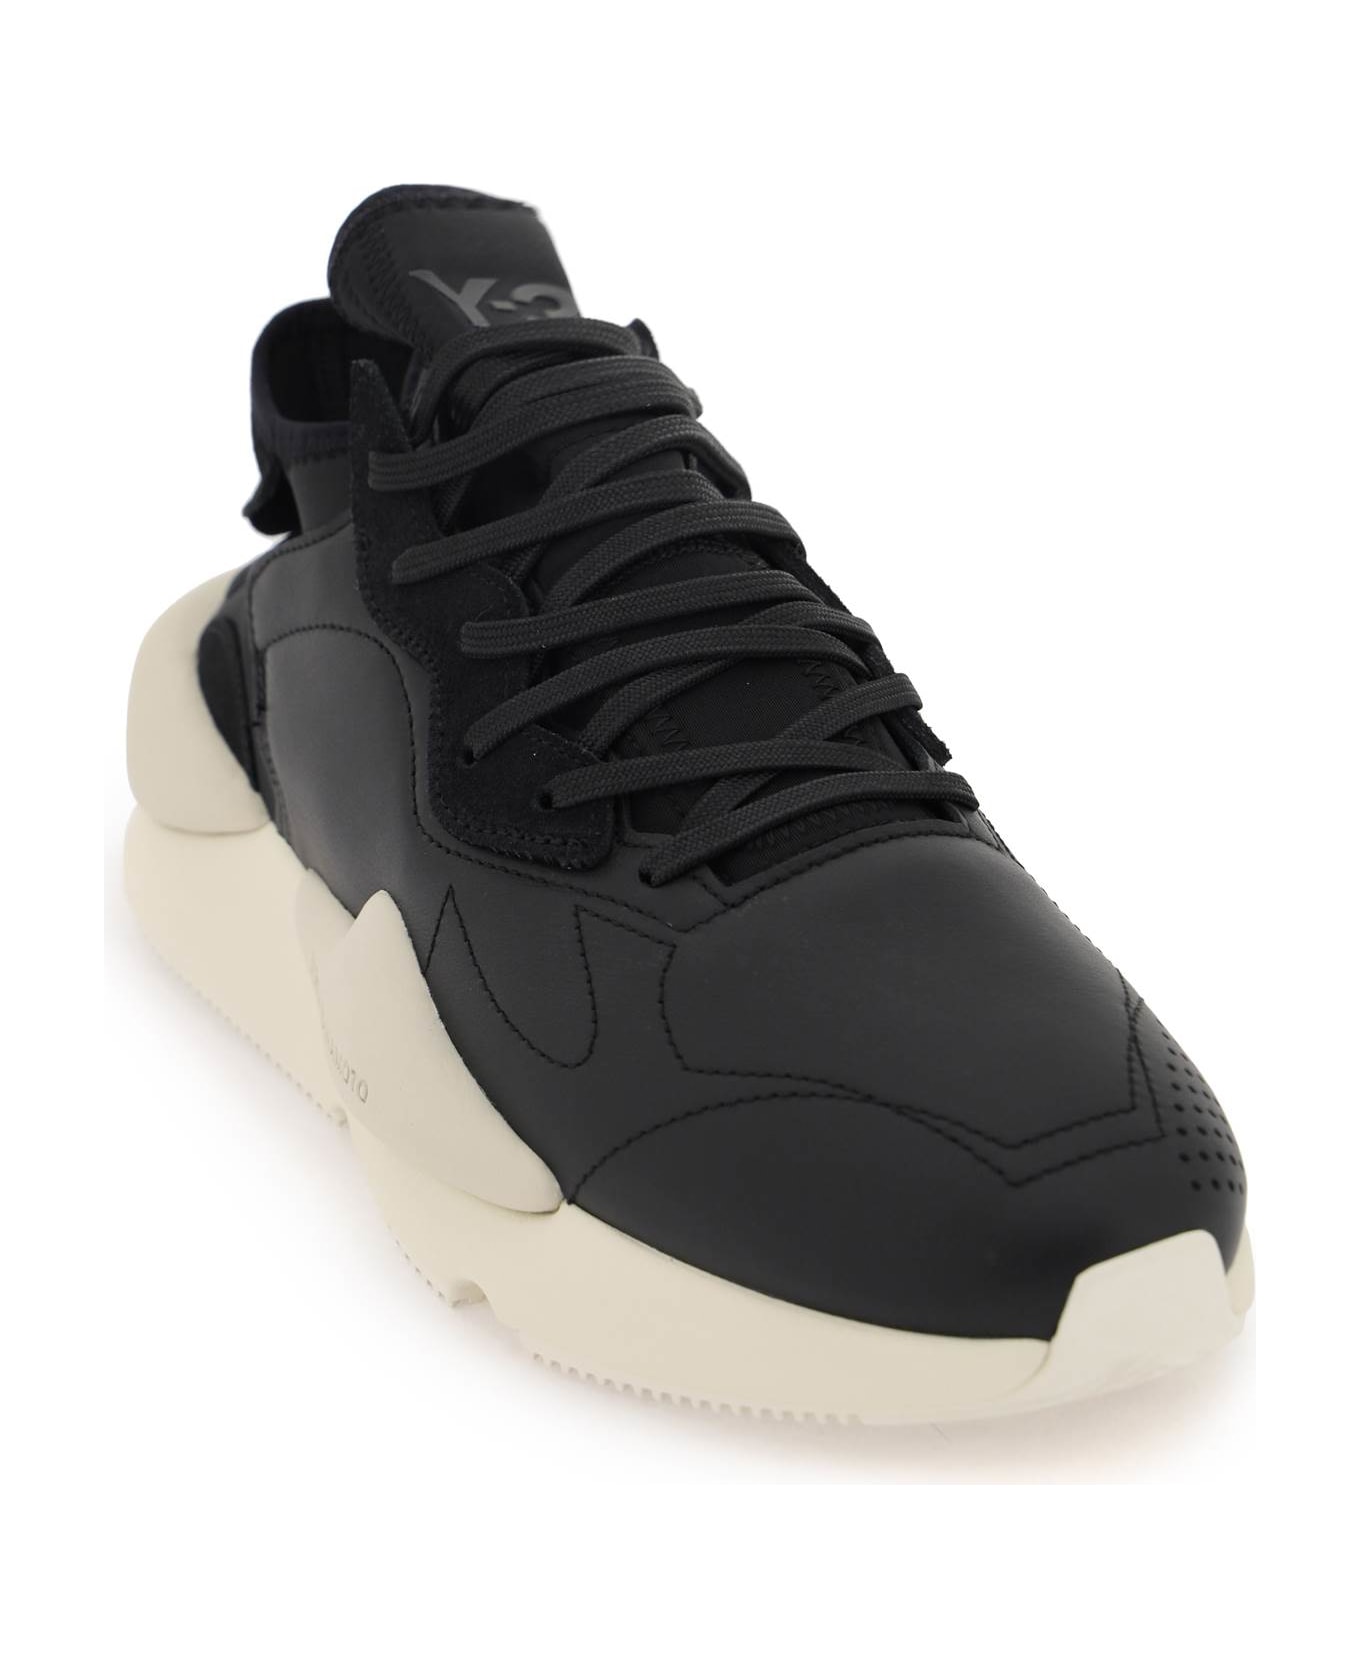 Y-3 Black Leather Blend Sneakers - Black/owhite/cbro